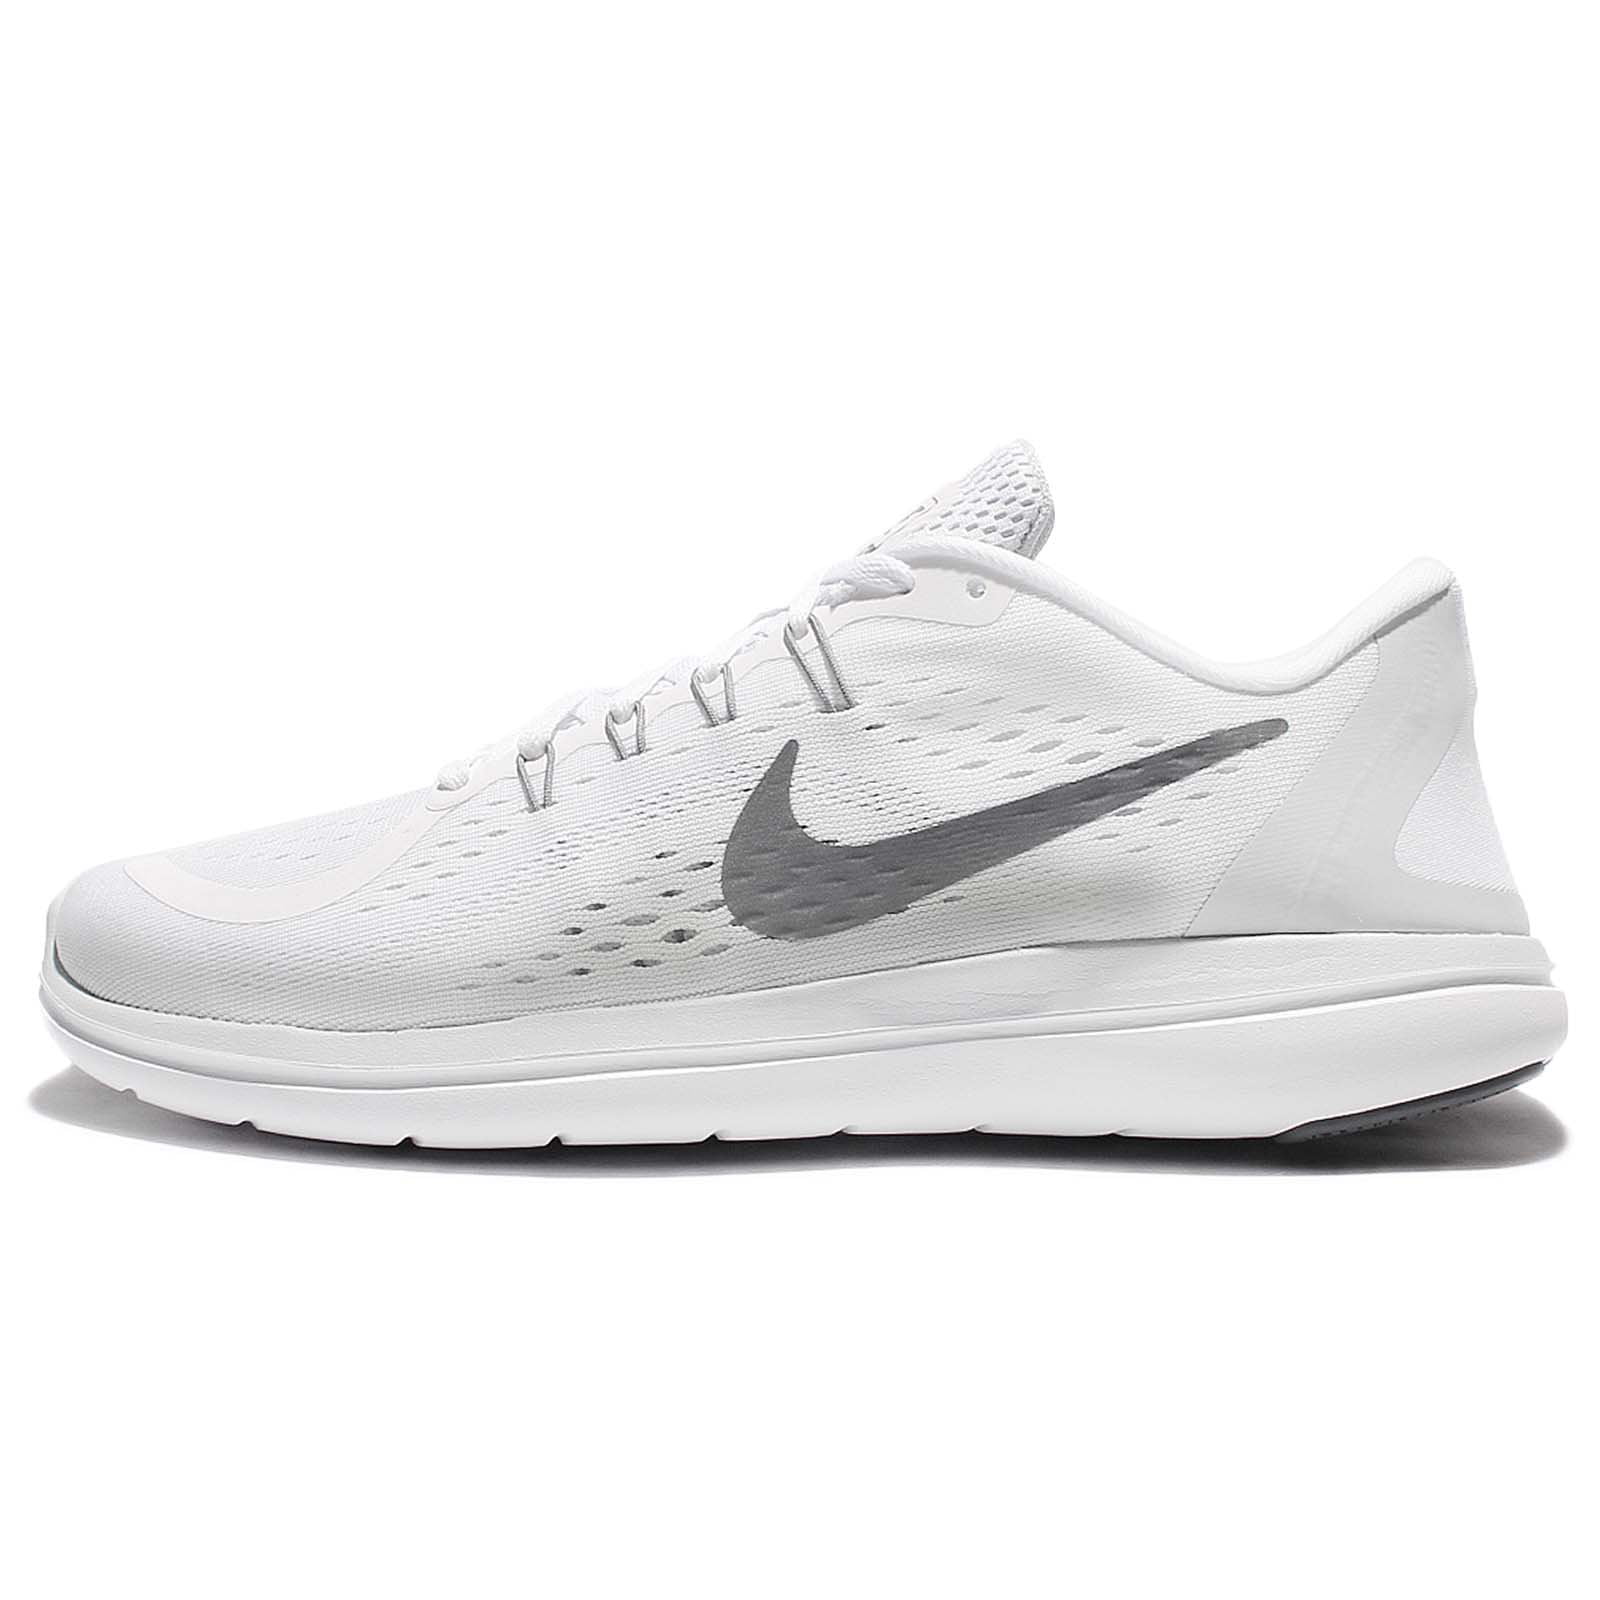 Nike 898457-100 : Men's Flex 2017 RN Running Shoe, White/Pure Platinum ...